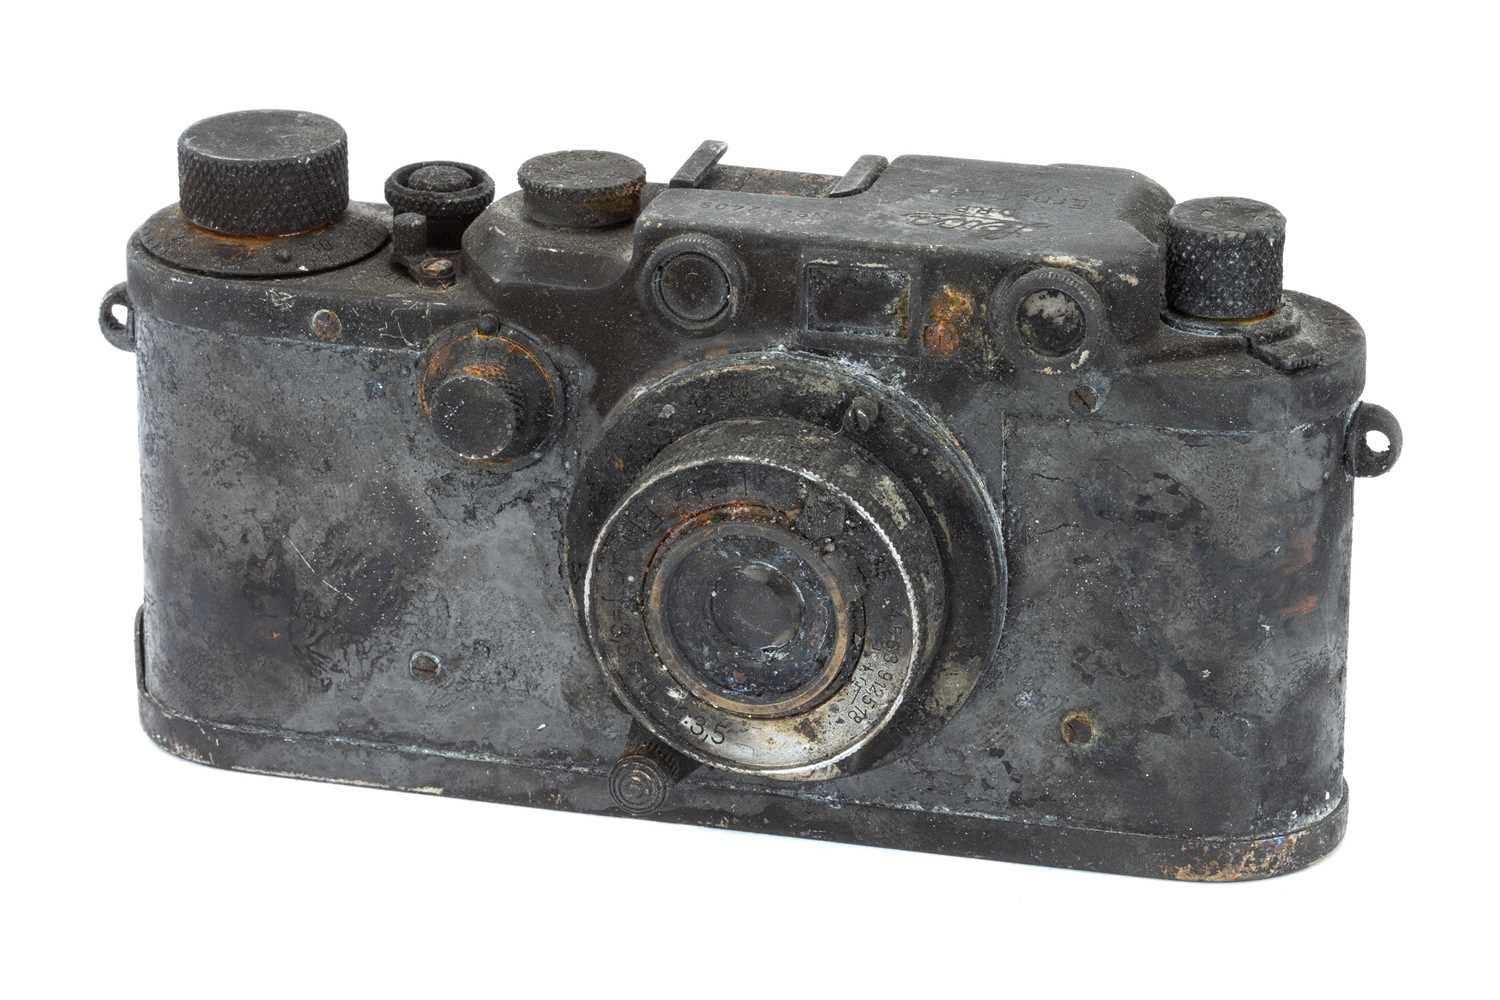 Lot 574 - A Fire Damaged Leica IIIc Rangefinder Camera